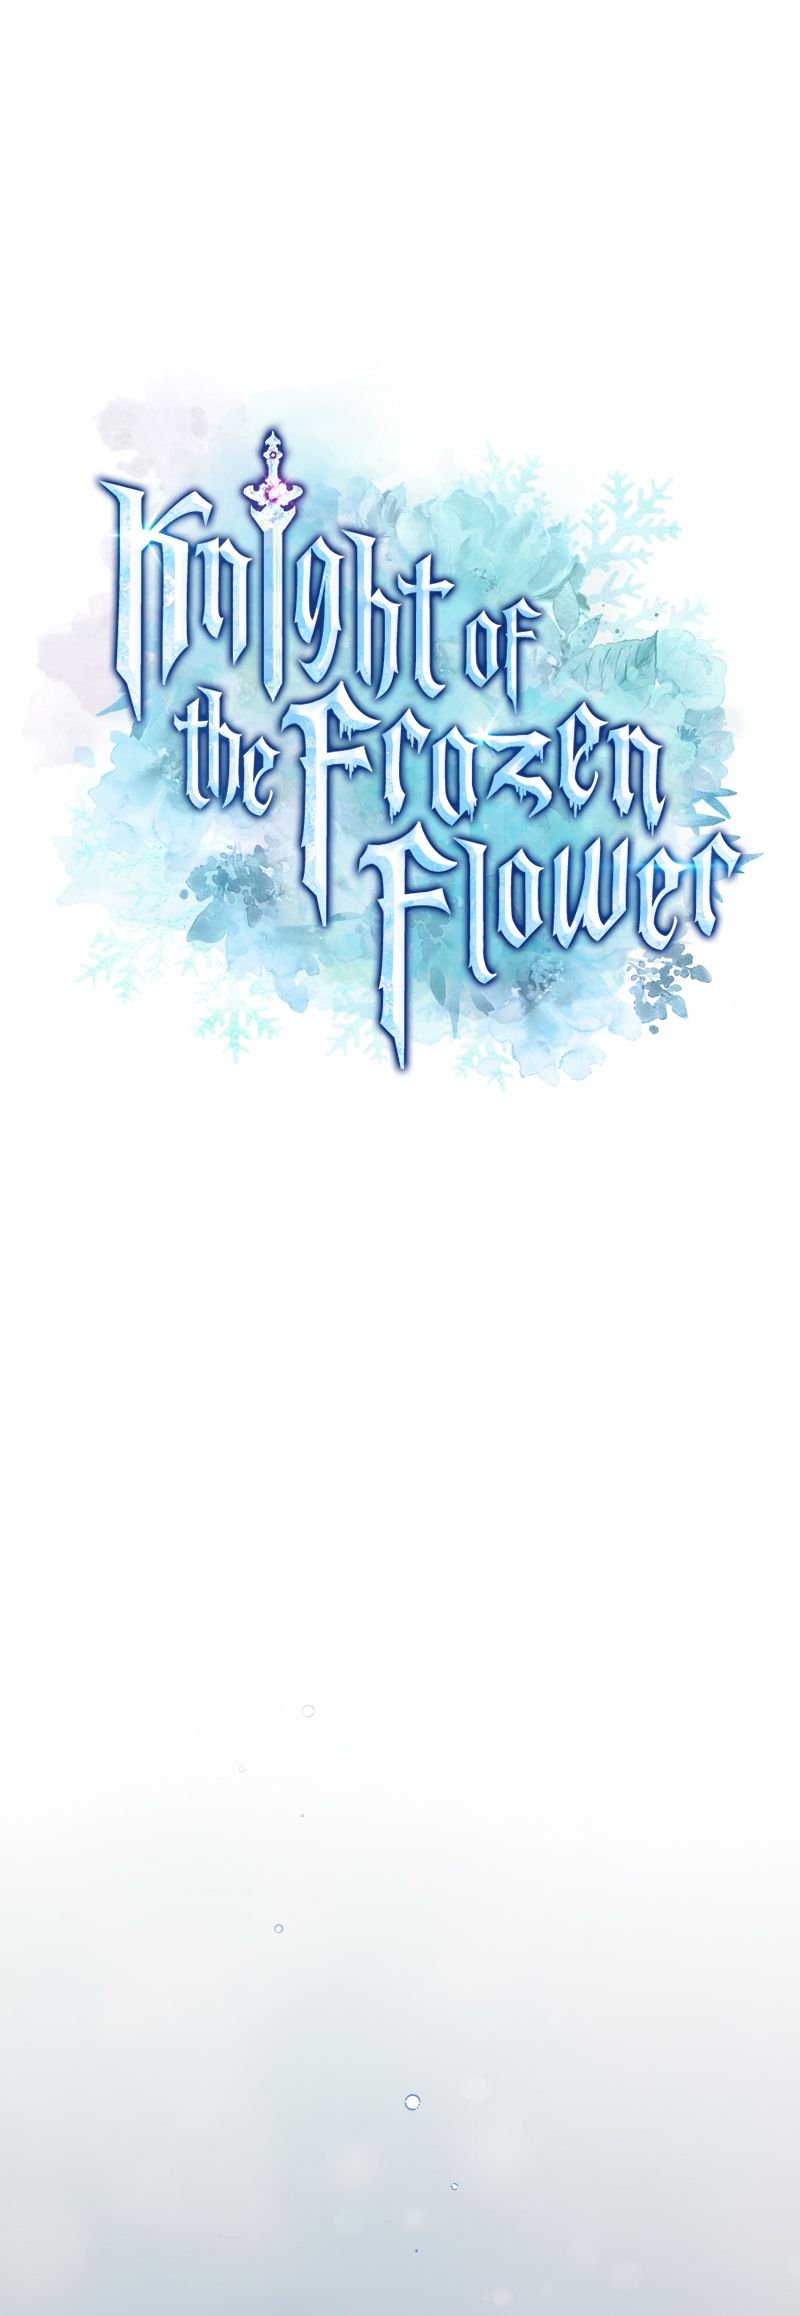 Knight of the Frozen Flower 41 11